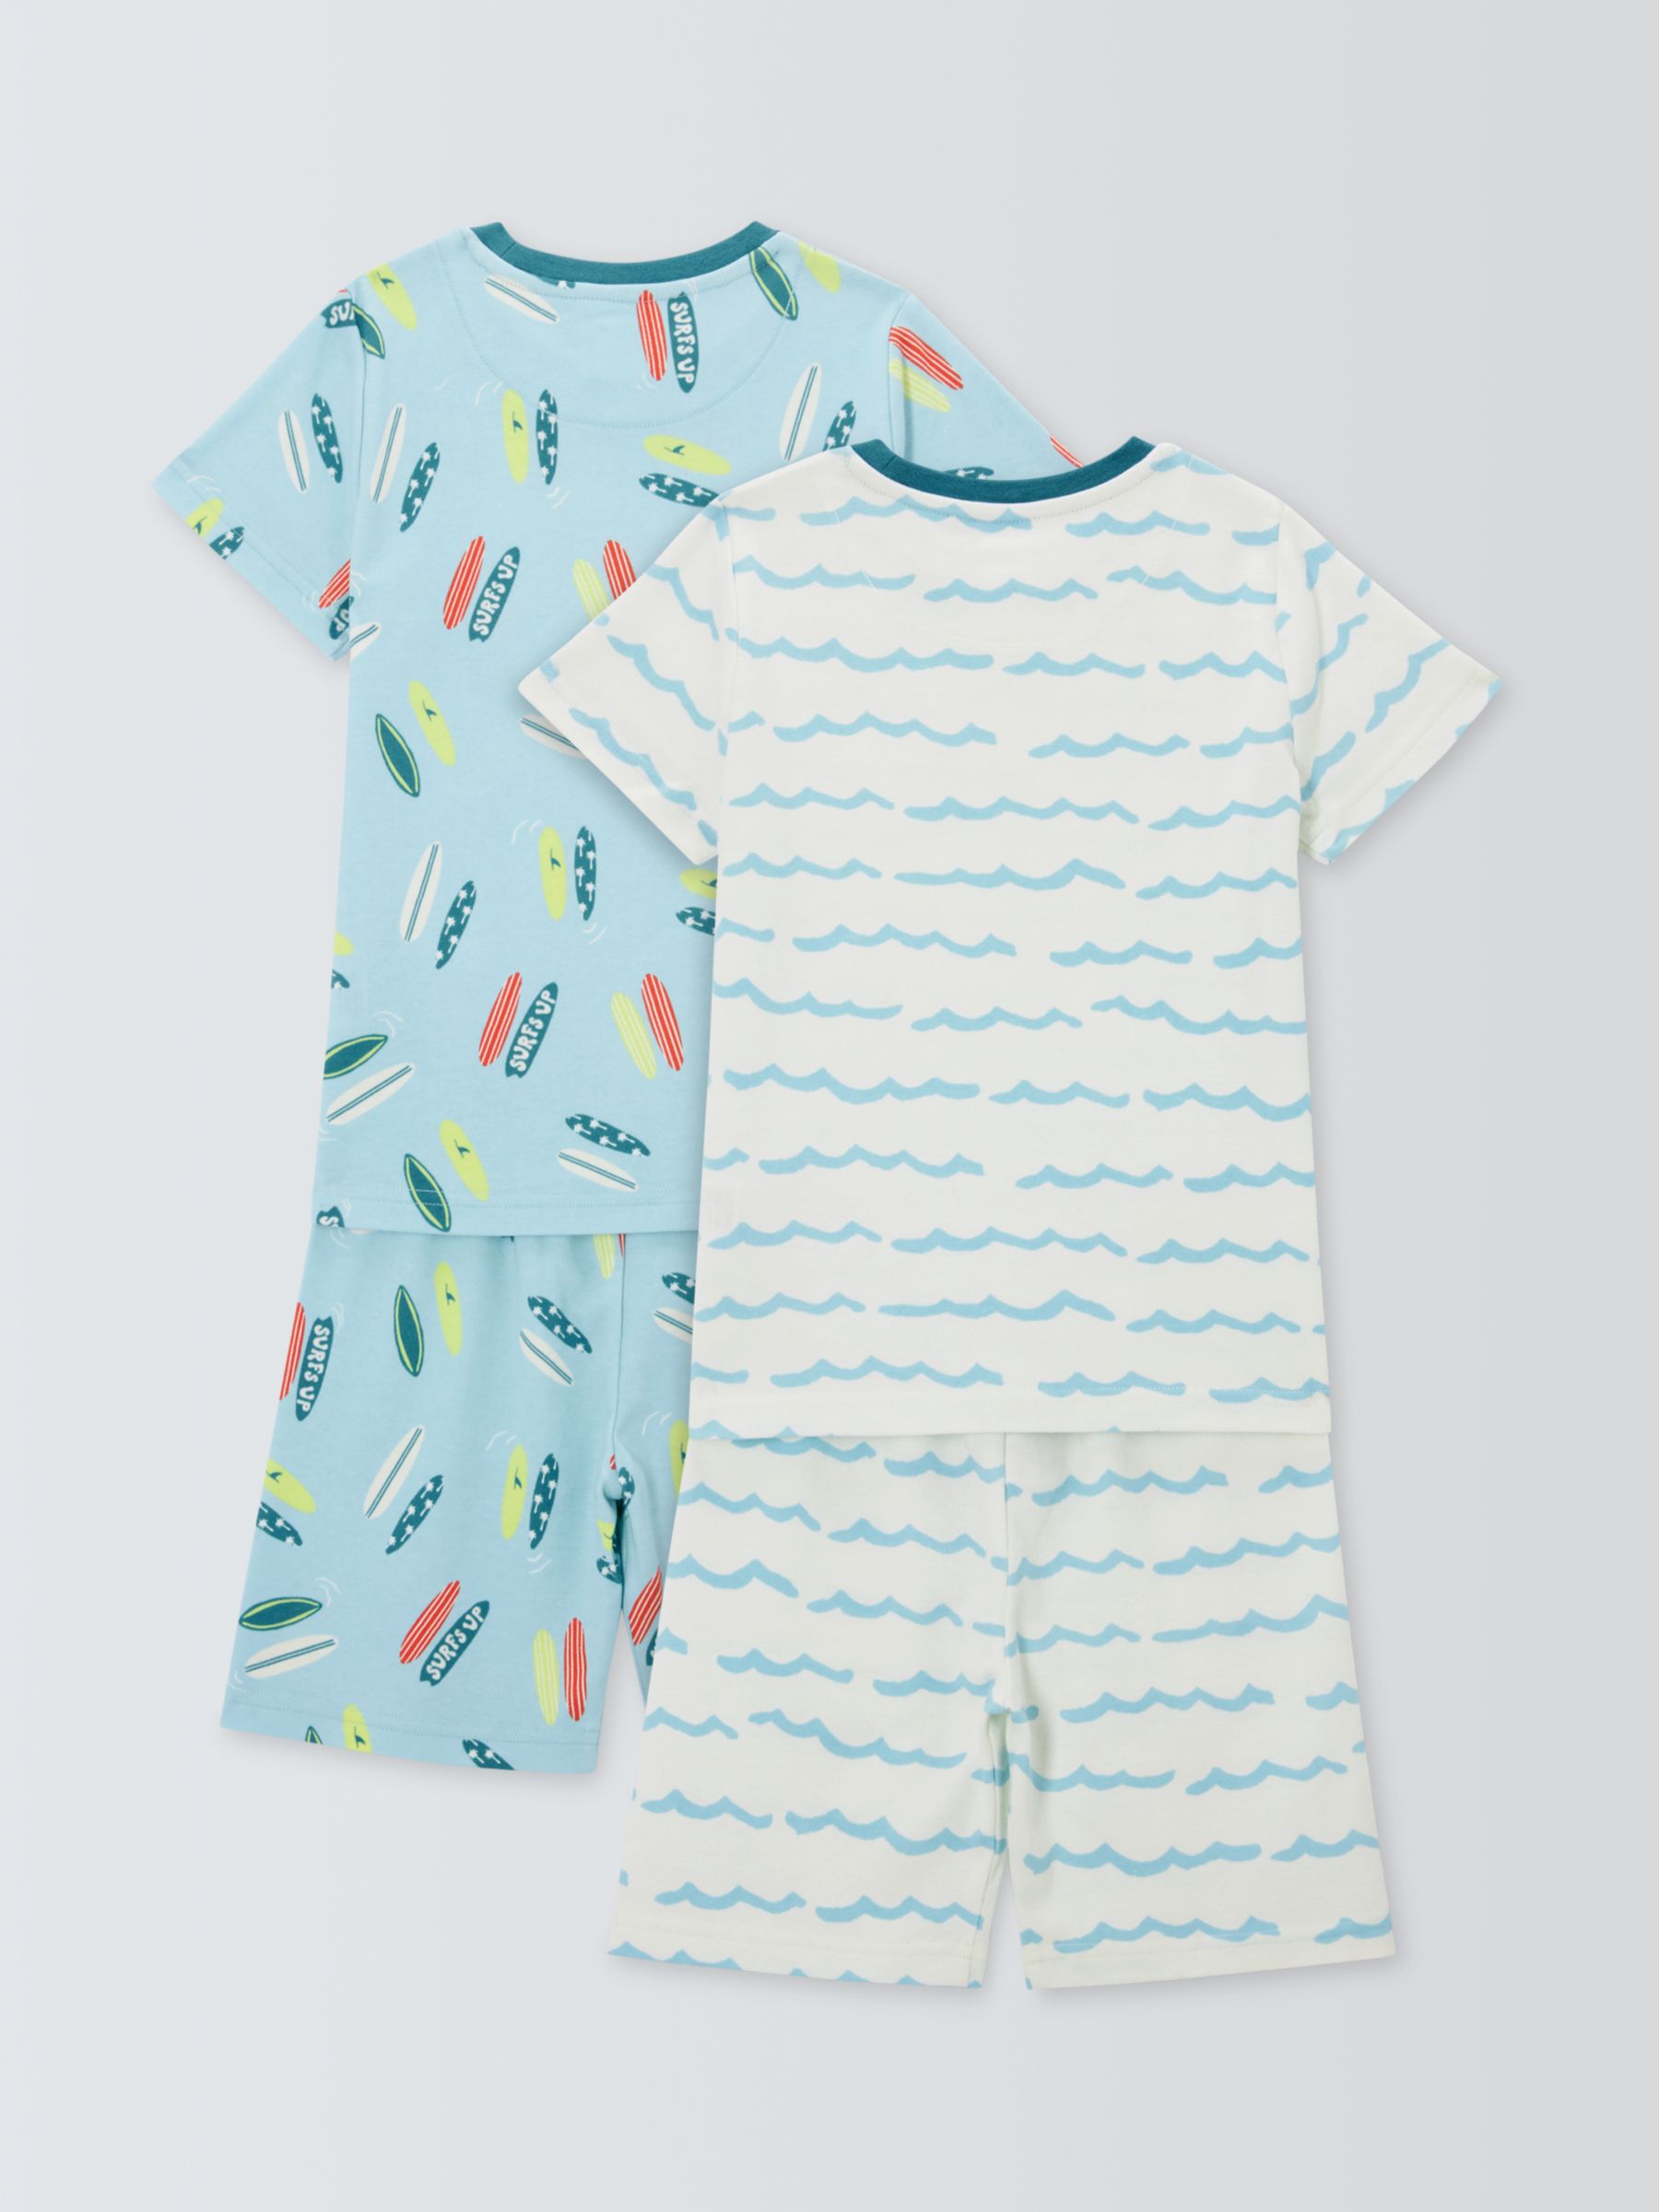 John Lewis Kids' Surf Print Shorts Pyjamas, Pack of 2, Blue/Multi, 9 years